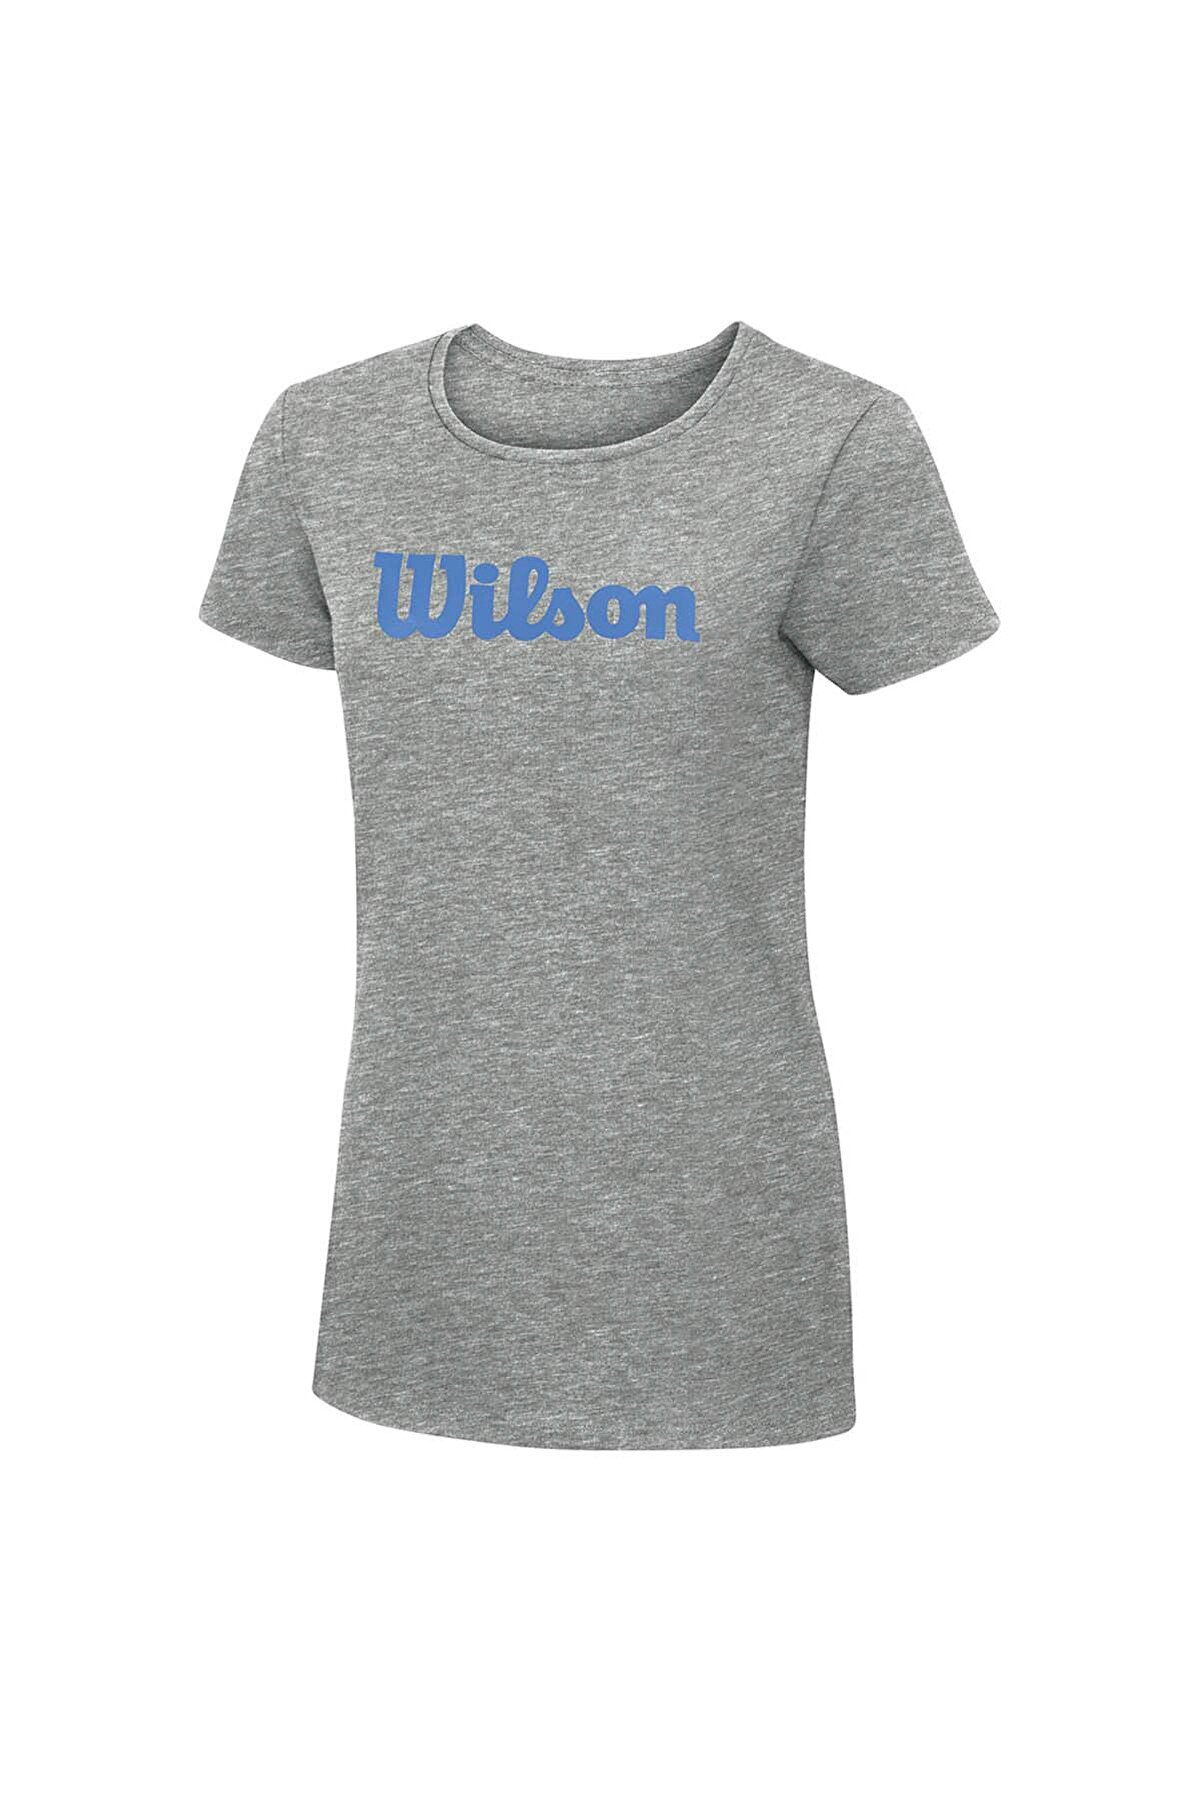 Wilson Kadın T-Shirt Script Cotton Tee  Gri(Grey)  ( WRA758202 )